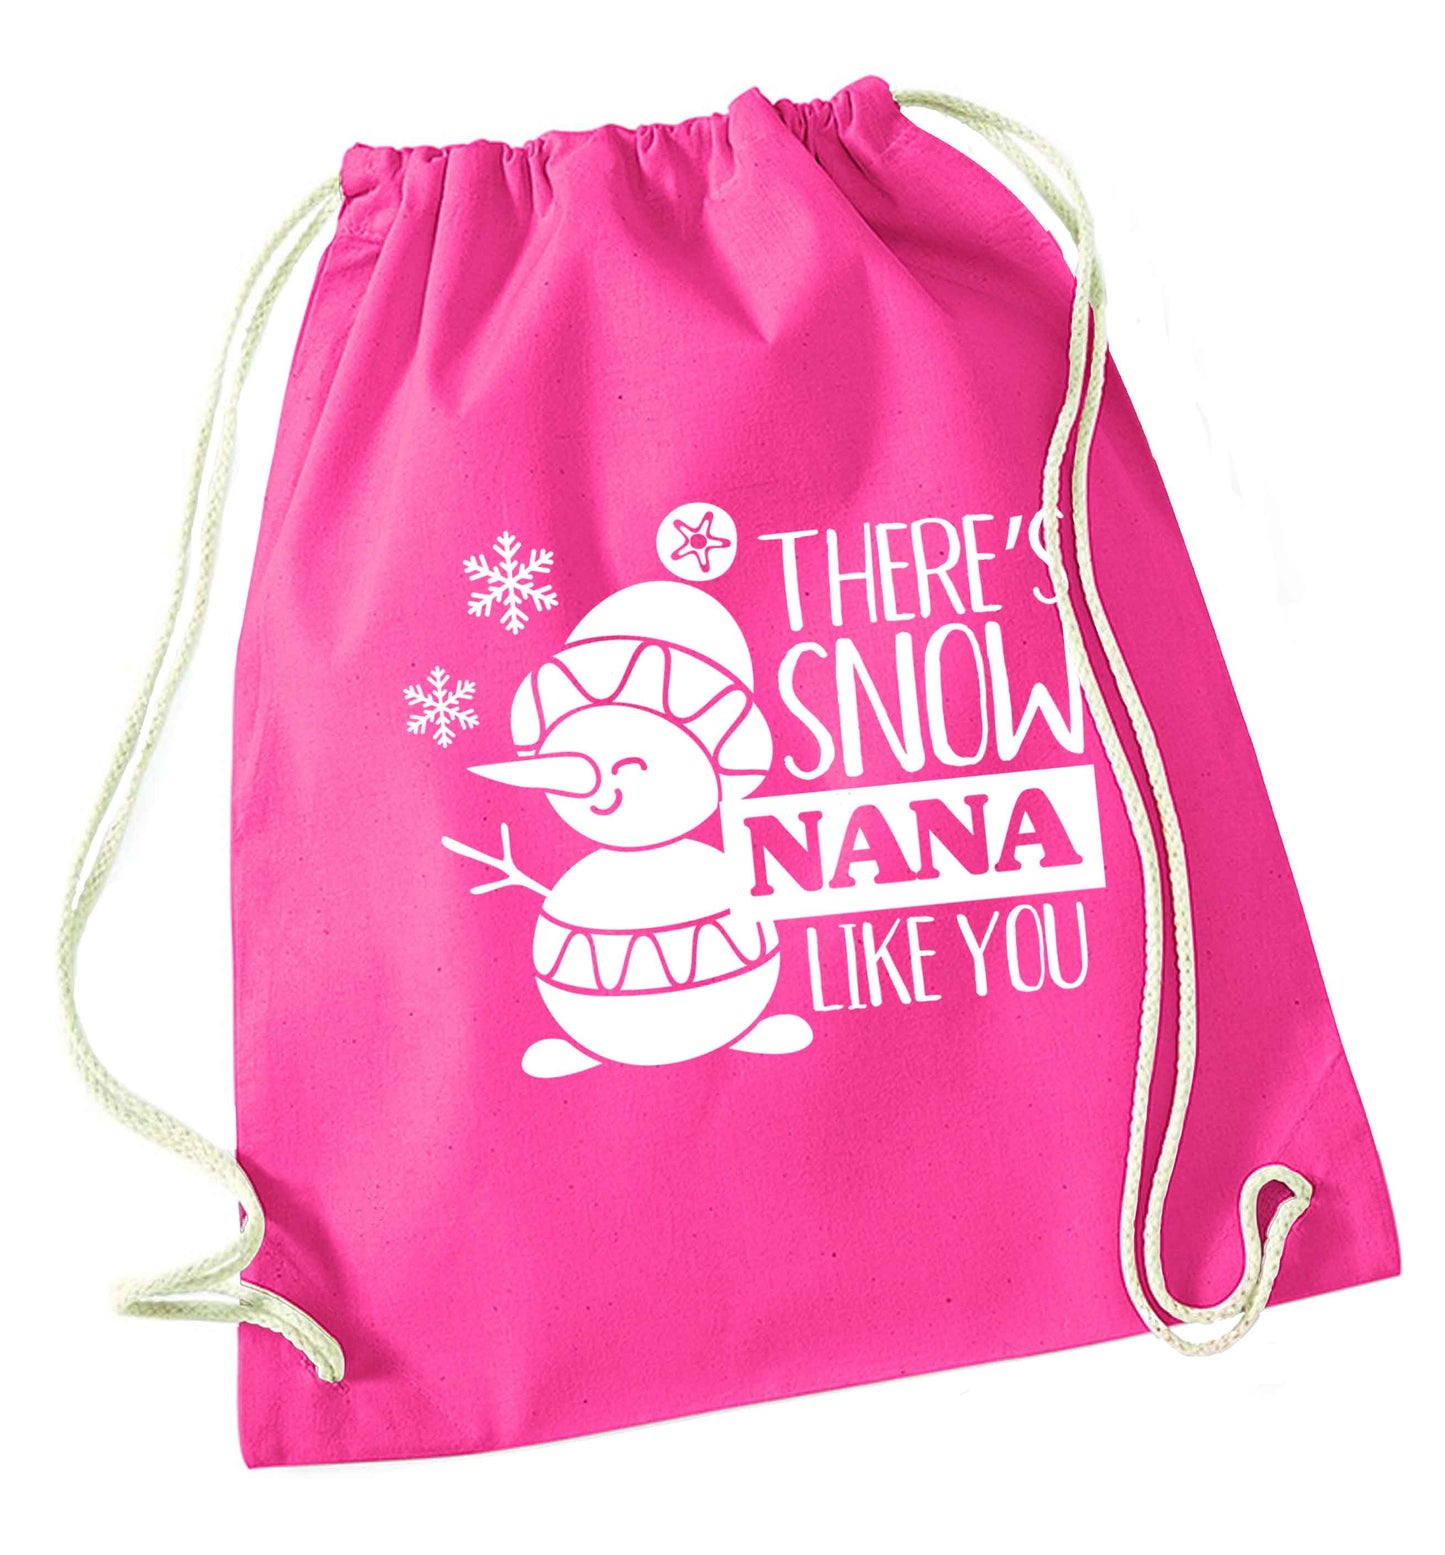 There's snow nana like you pink drawstring bag